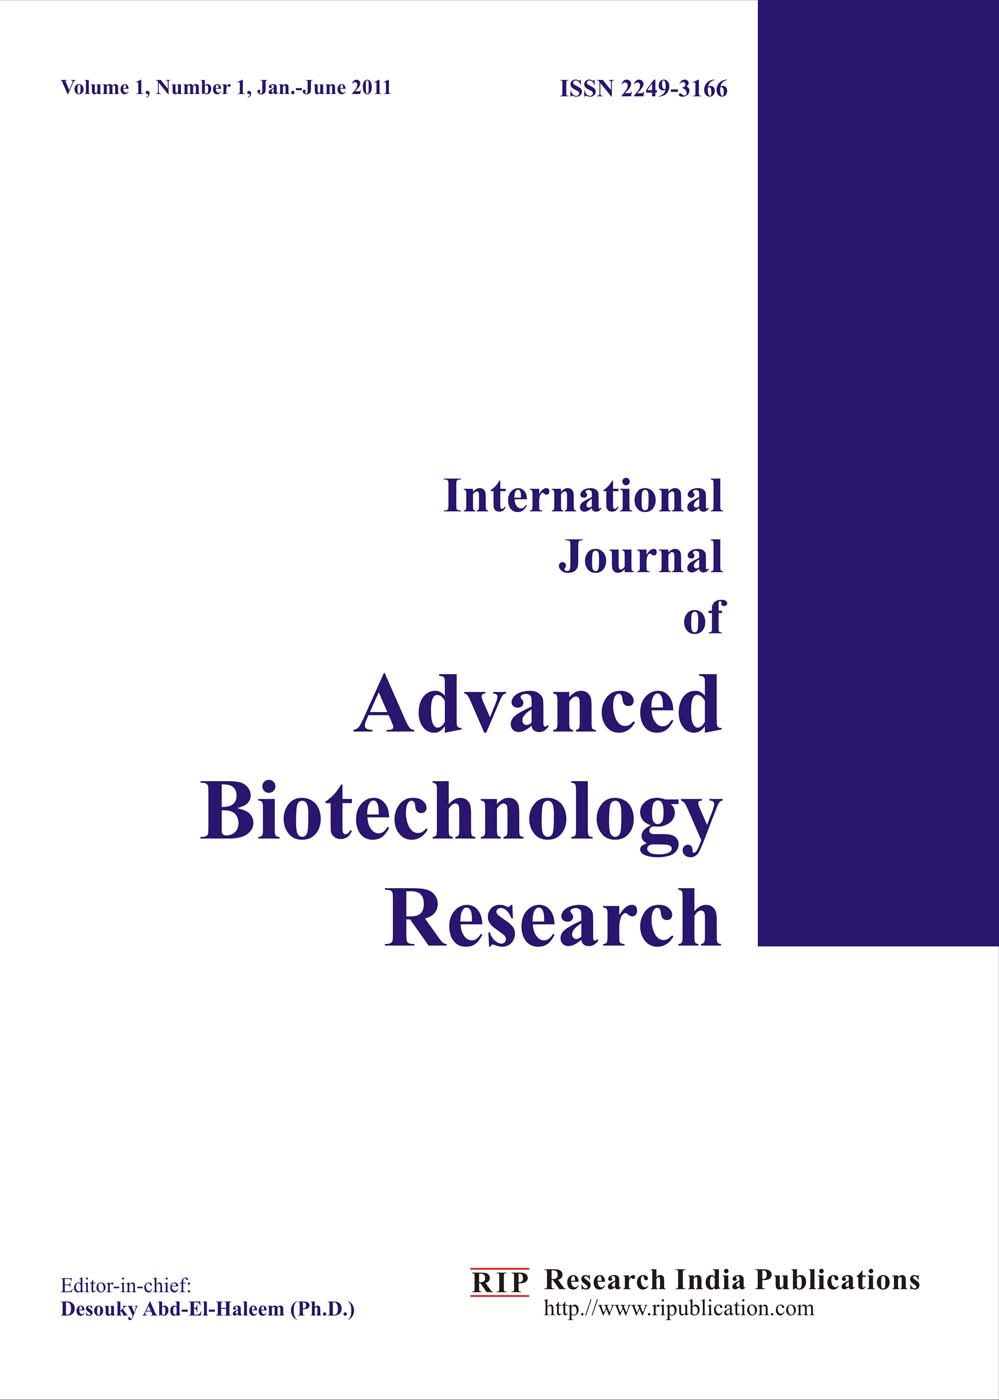 International Journal of Advanced Biotechnology Research